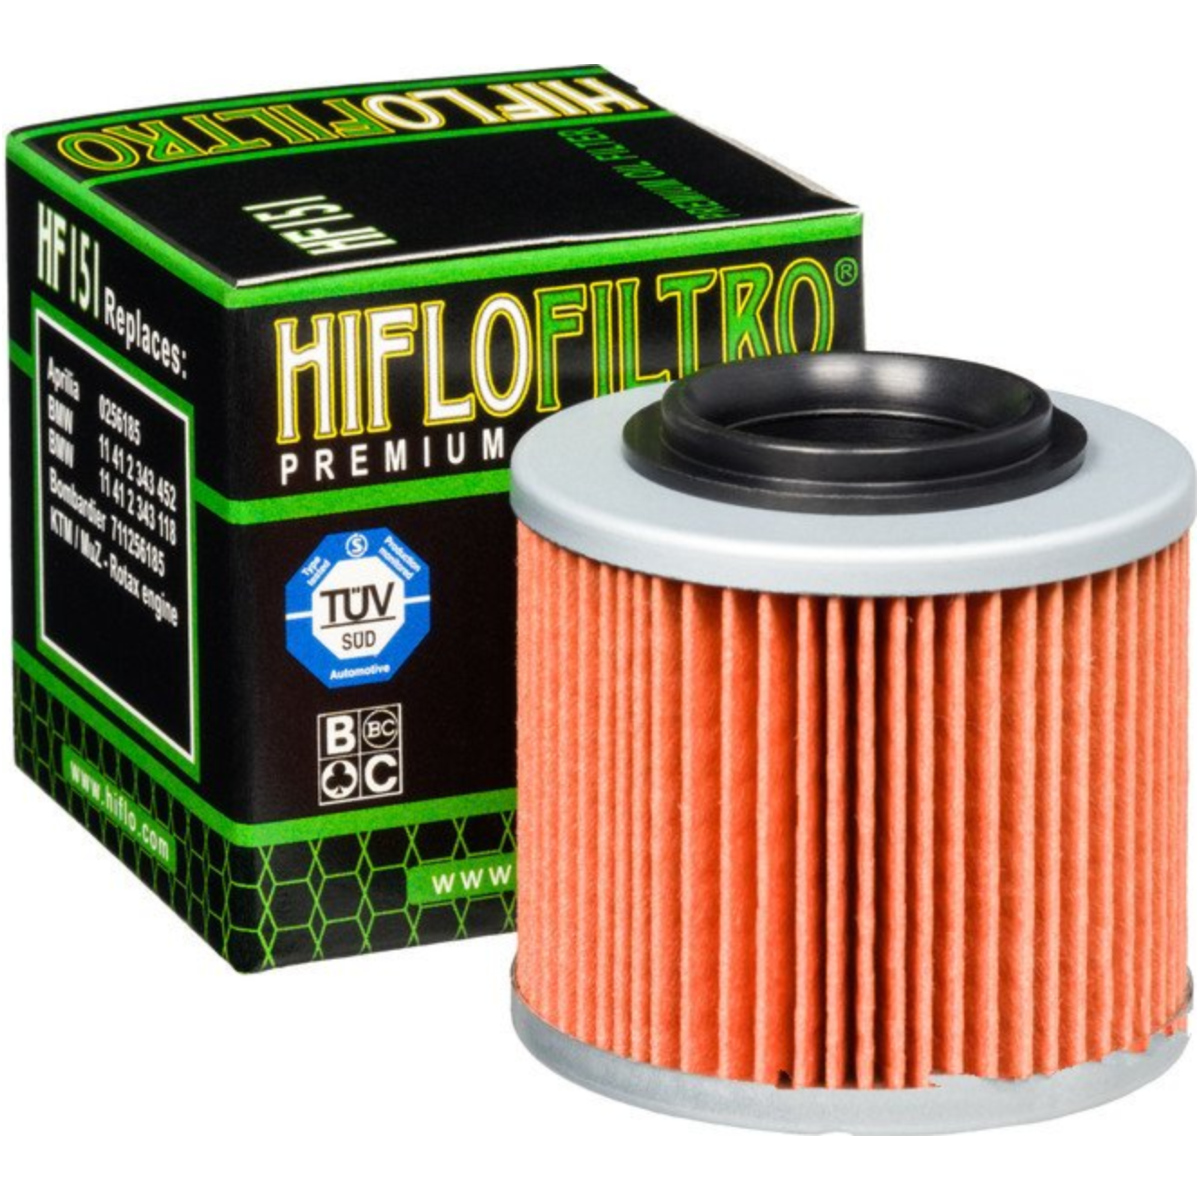 Hiflo hf151 Ölfilter hiflo von HIFLO